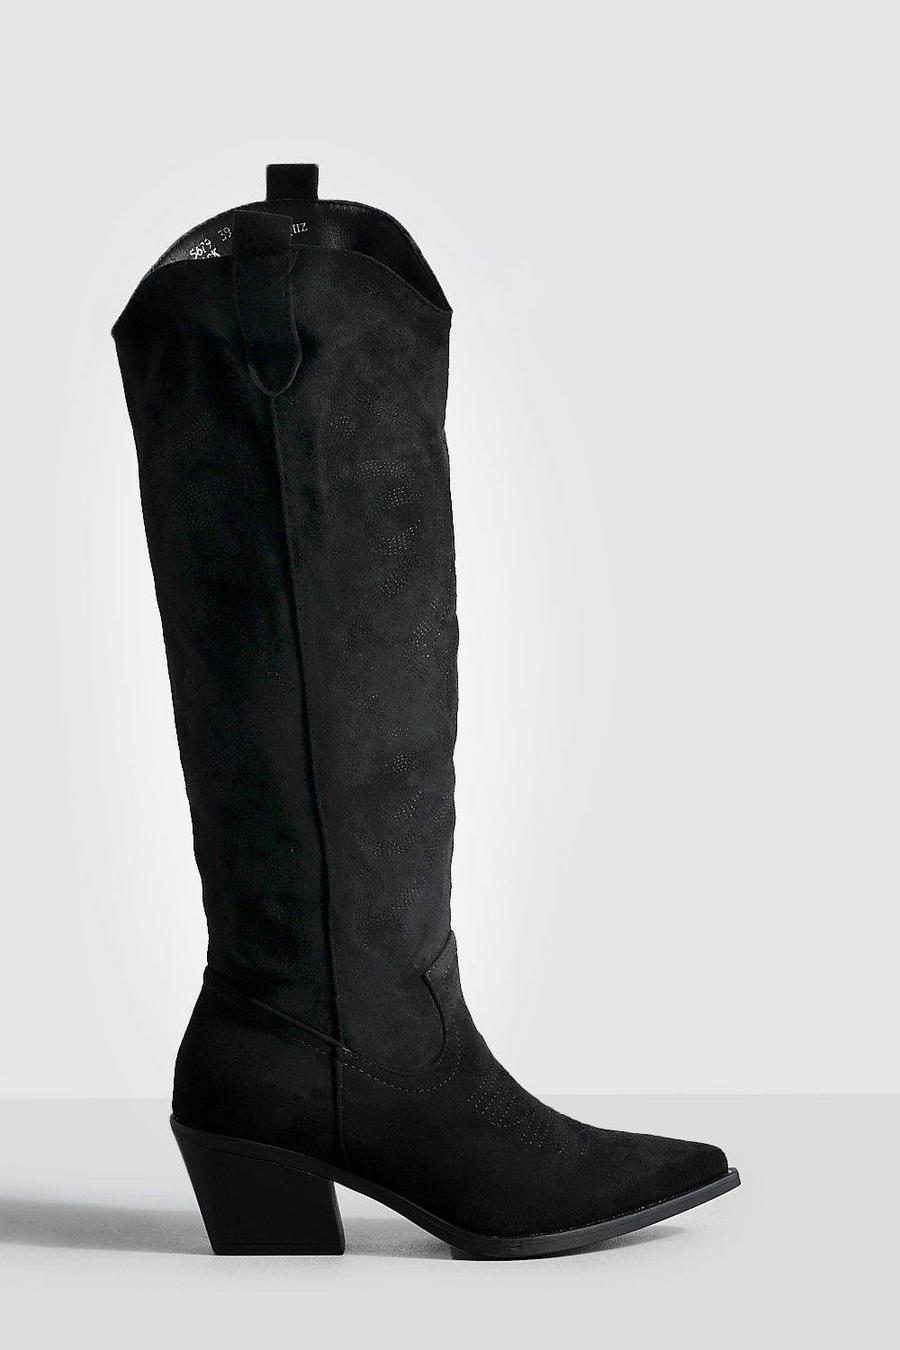 Black noir Low Heel Embroidered Knee High Western Cowboy Boots